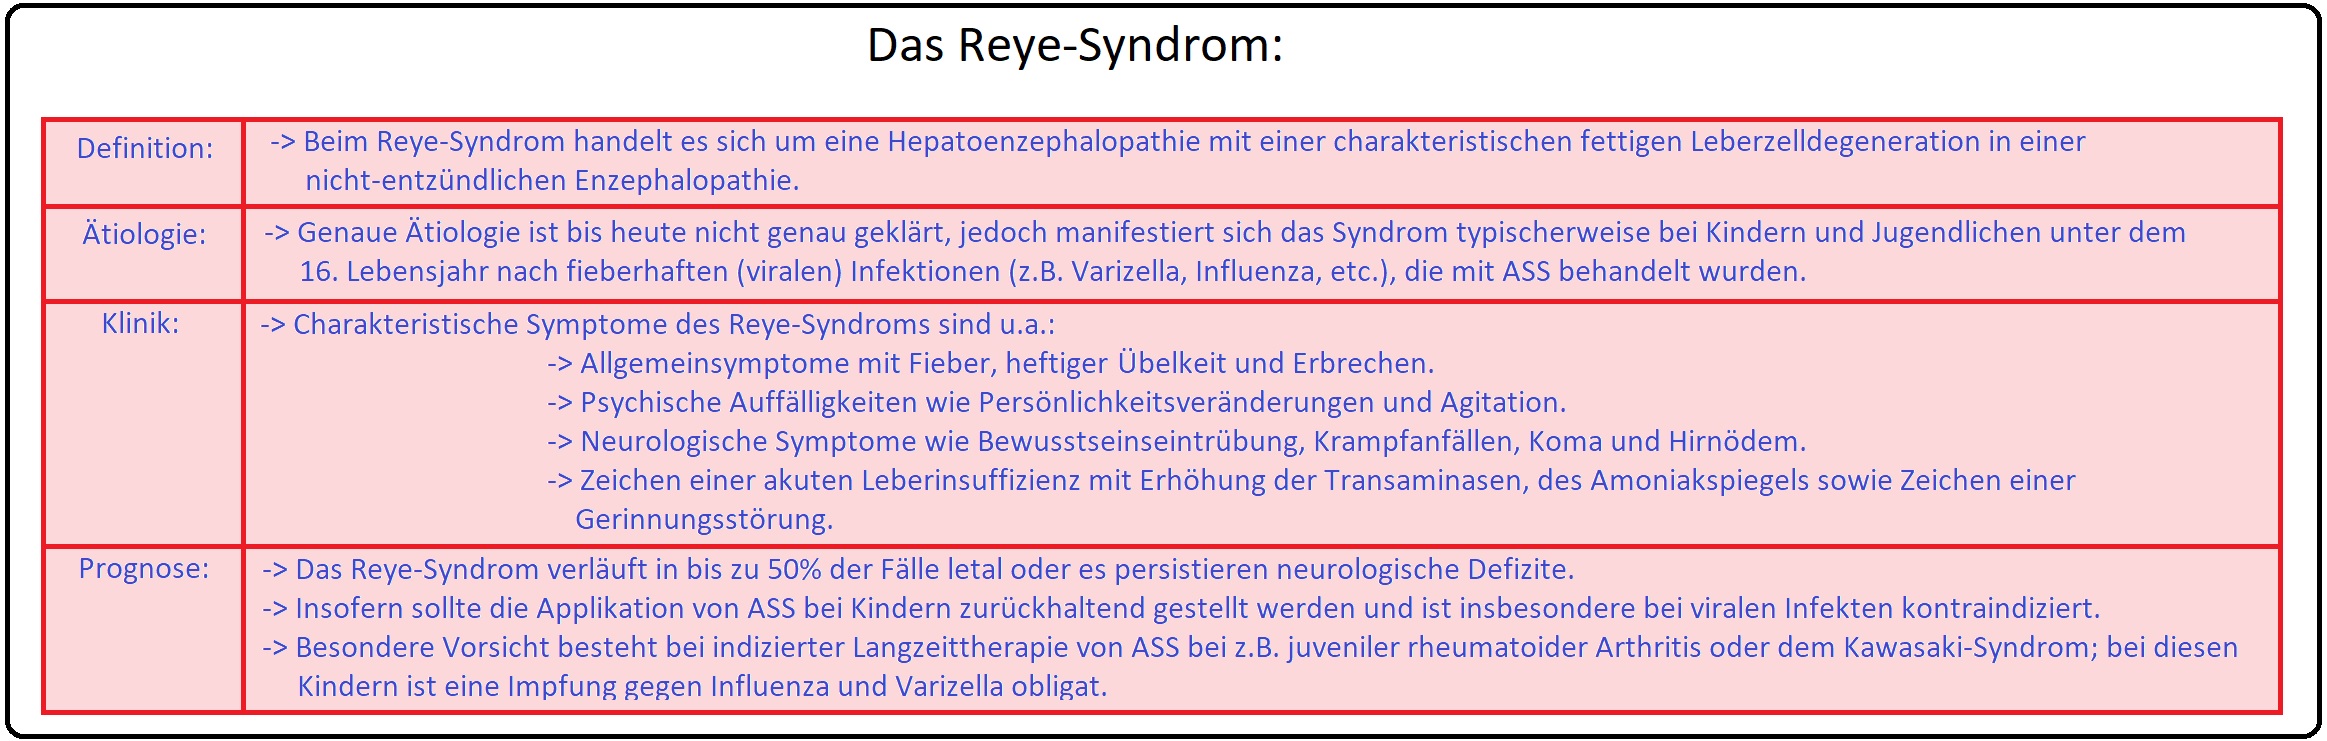 134 Das Reye Syndrom